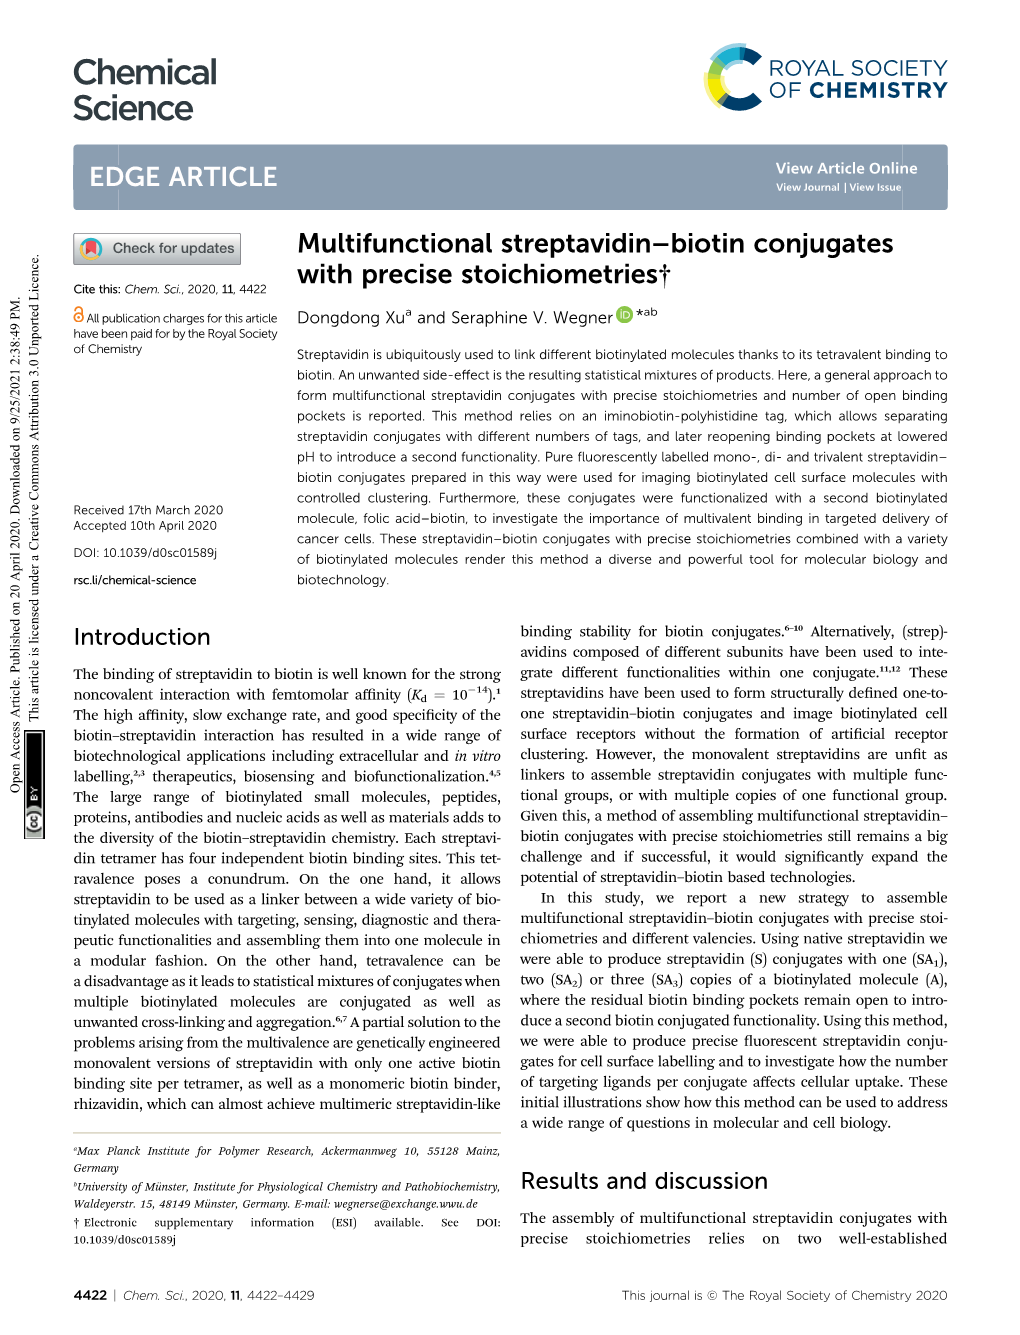 Multifunctional Streptavidin–Biotin Conjugates with Precise Stoichiometries† Cite This: Chem